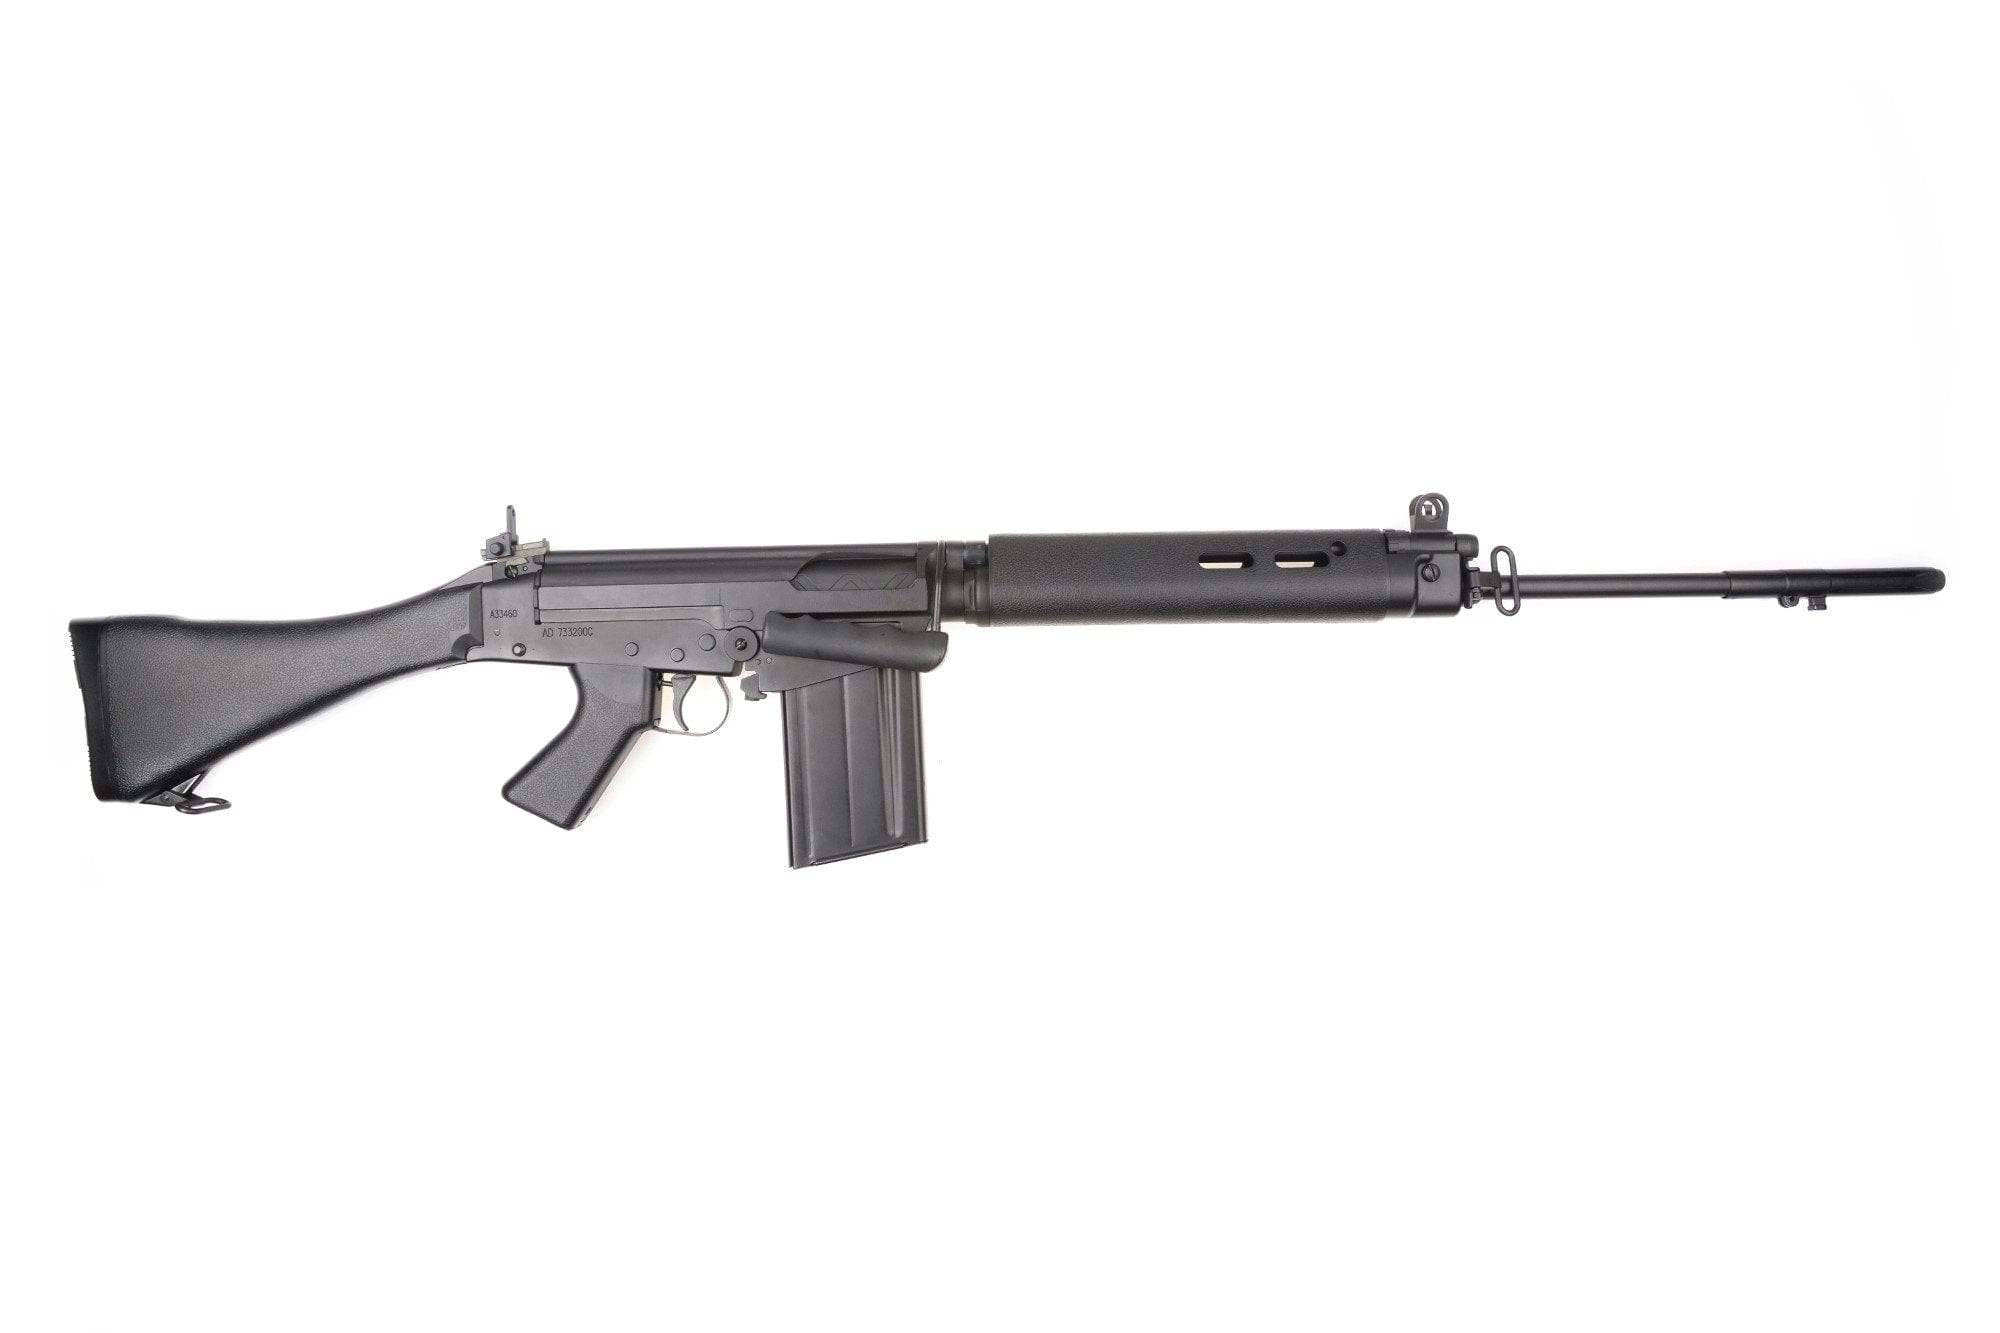 L1A1 SLR Semi-Automatic Rifle - Black